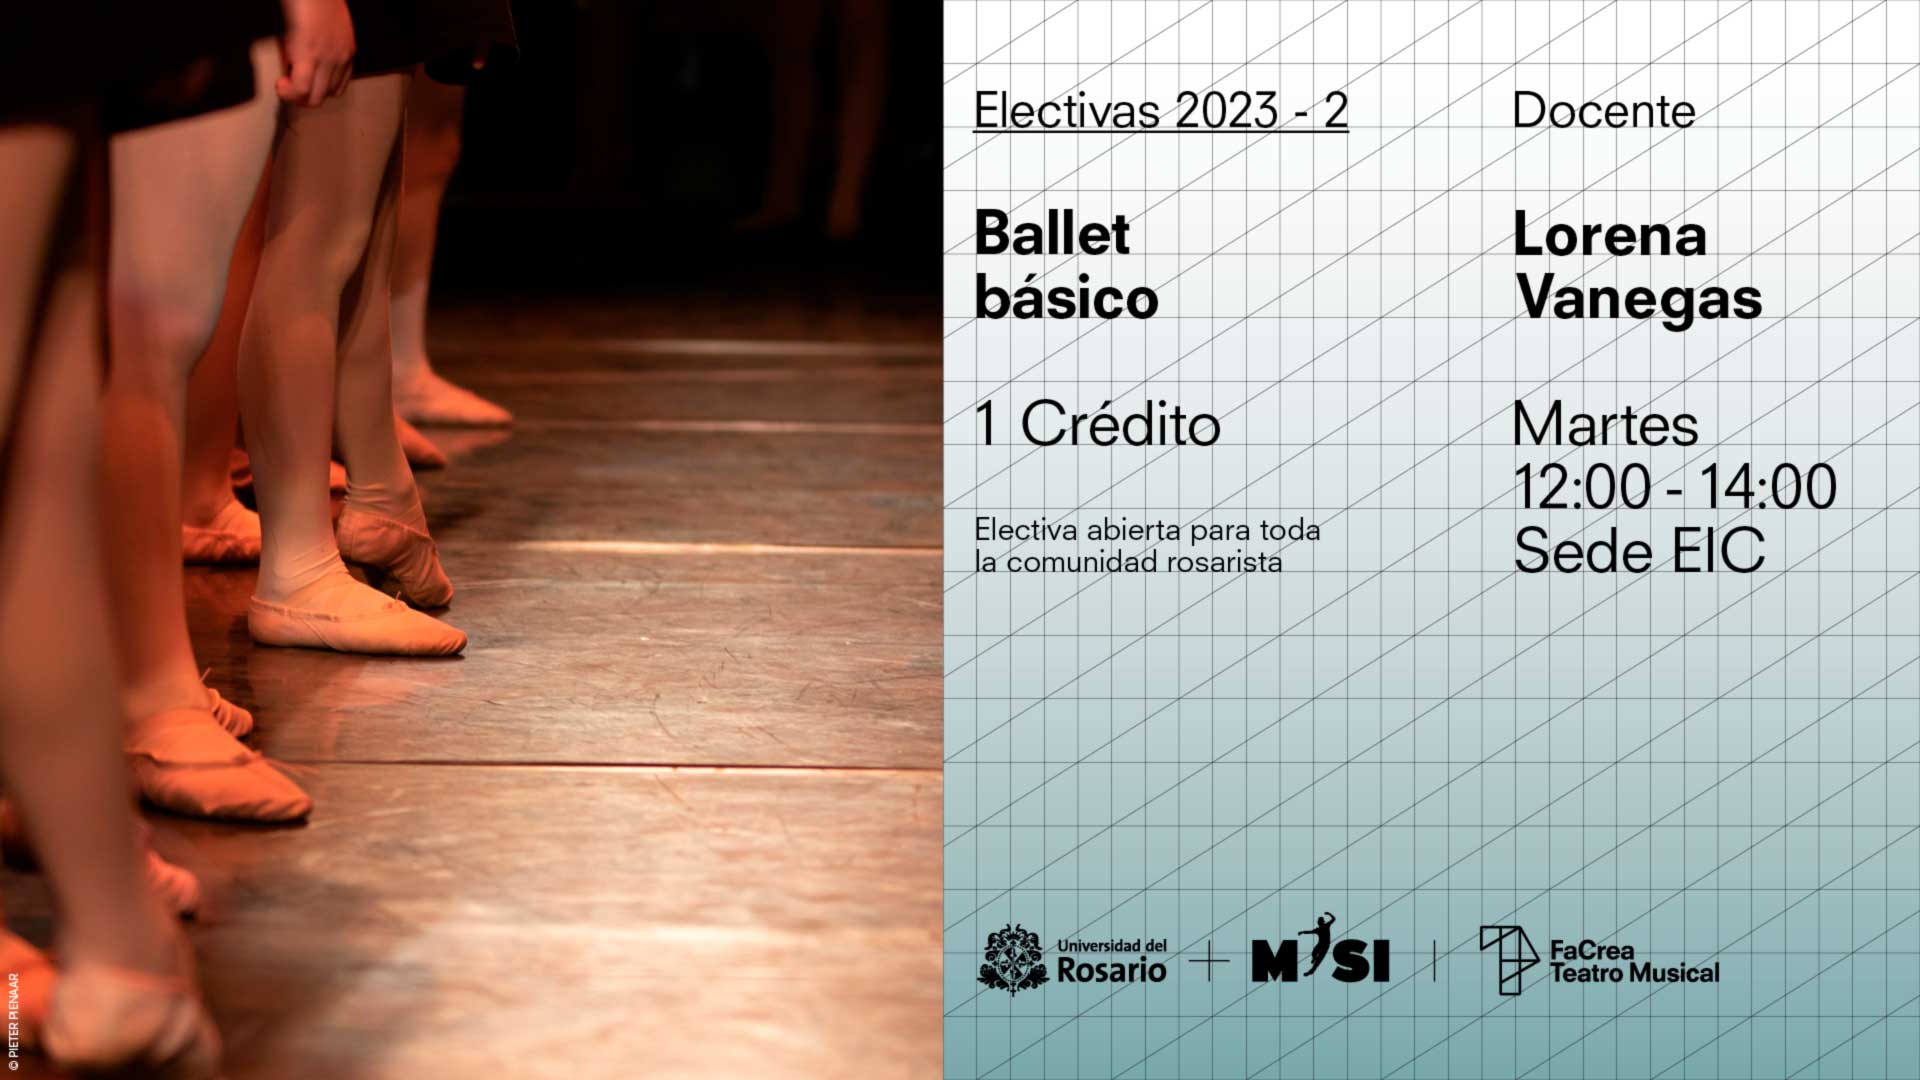 Ballet básico